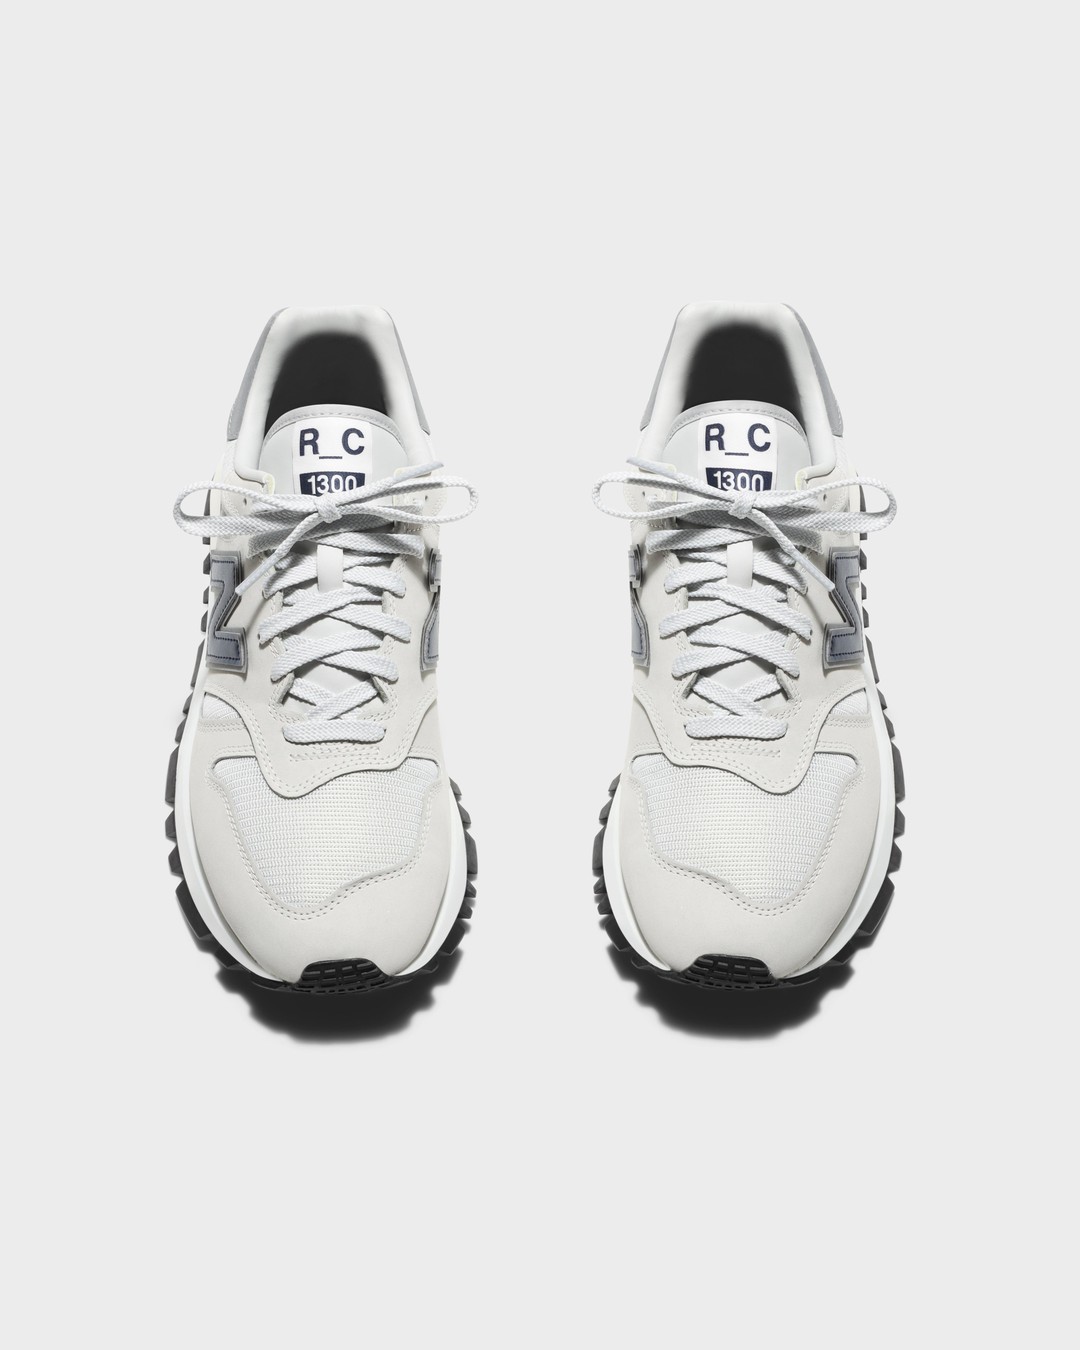 New Balance – Tokyo Design Studio R-C1300 Grey - Sneakers - White - Image 5